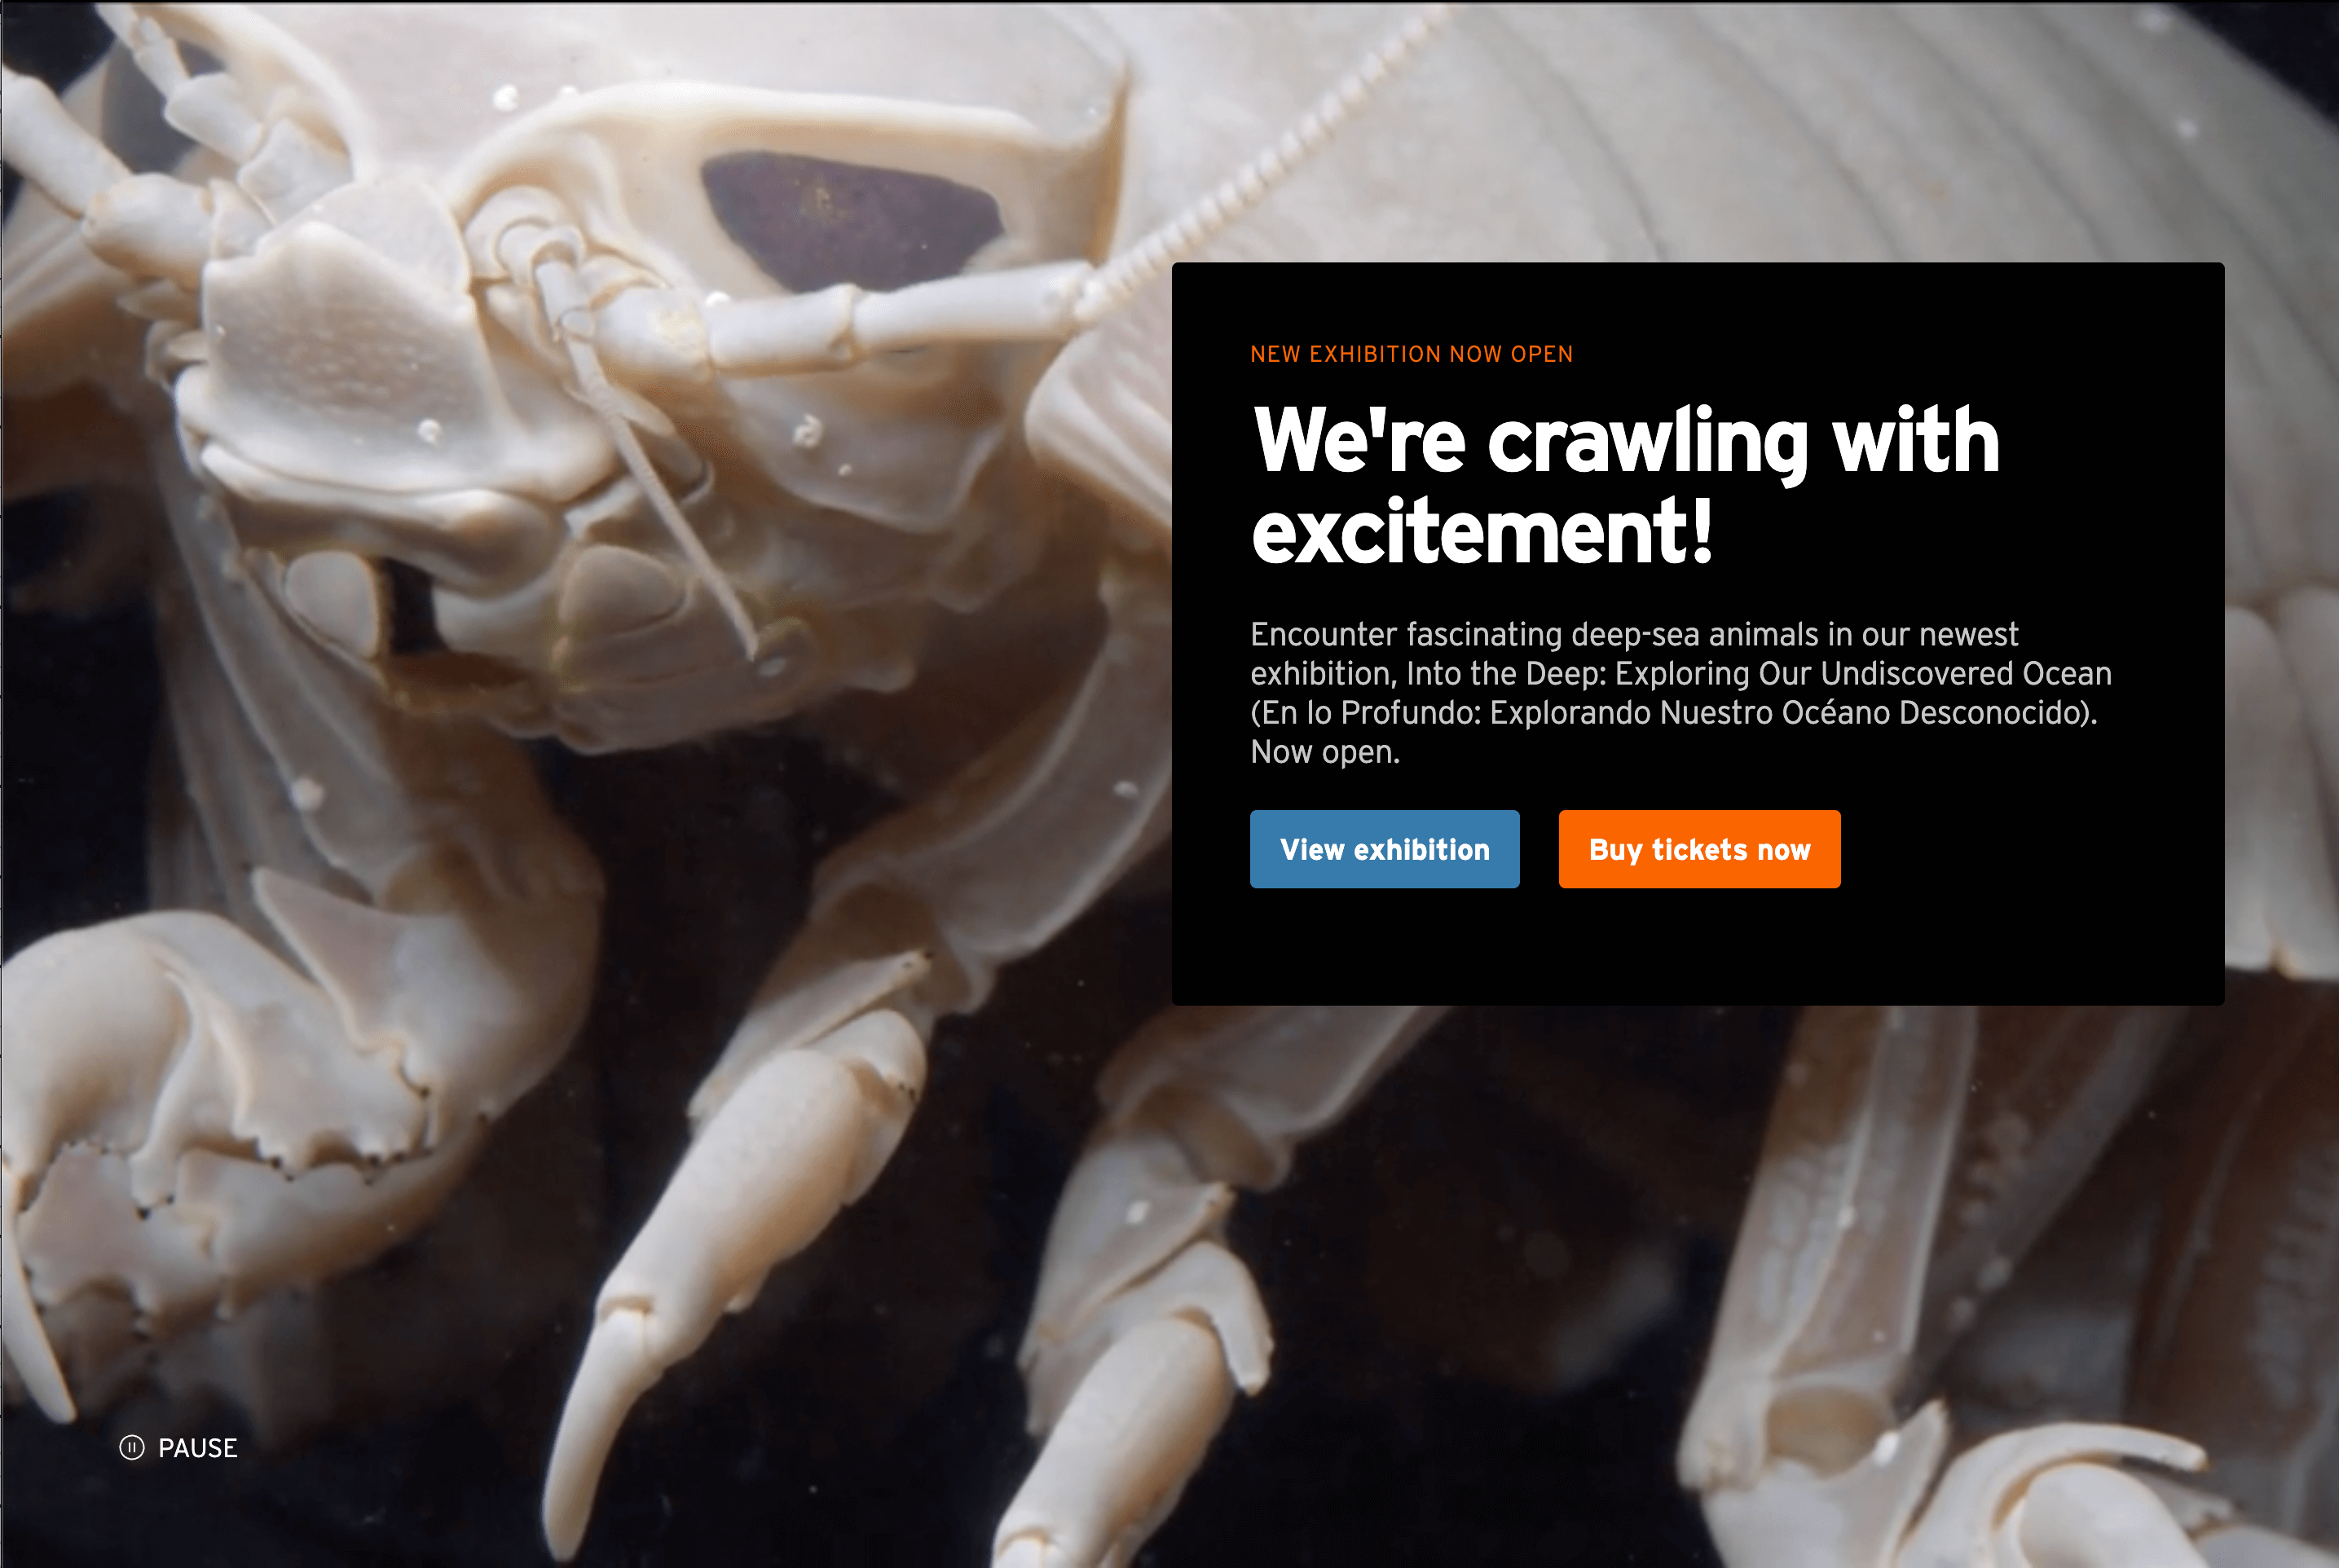 The Monterey Bay Aquarium's home page